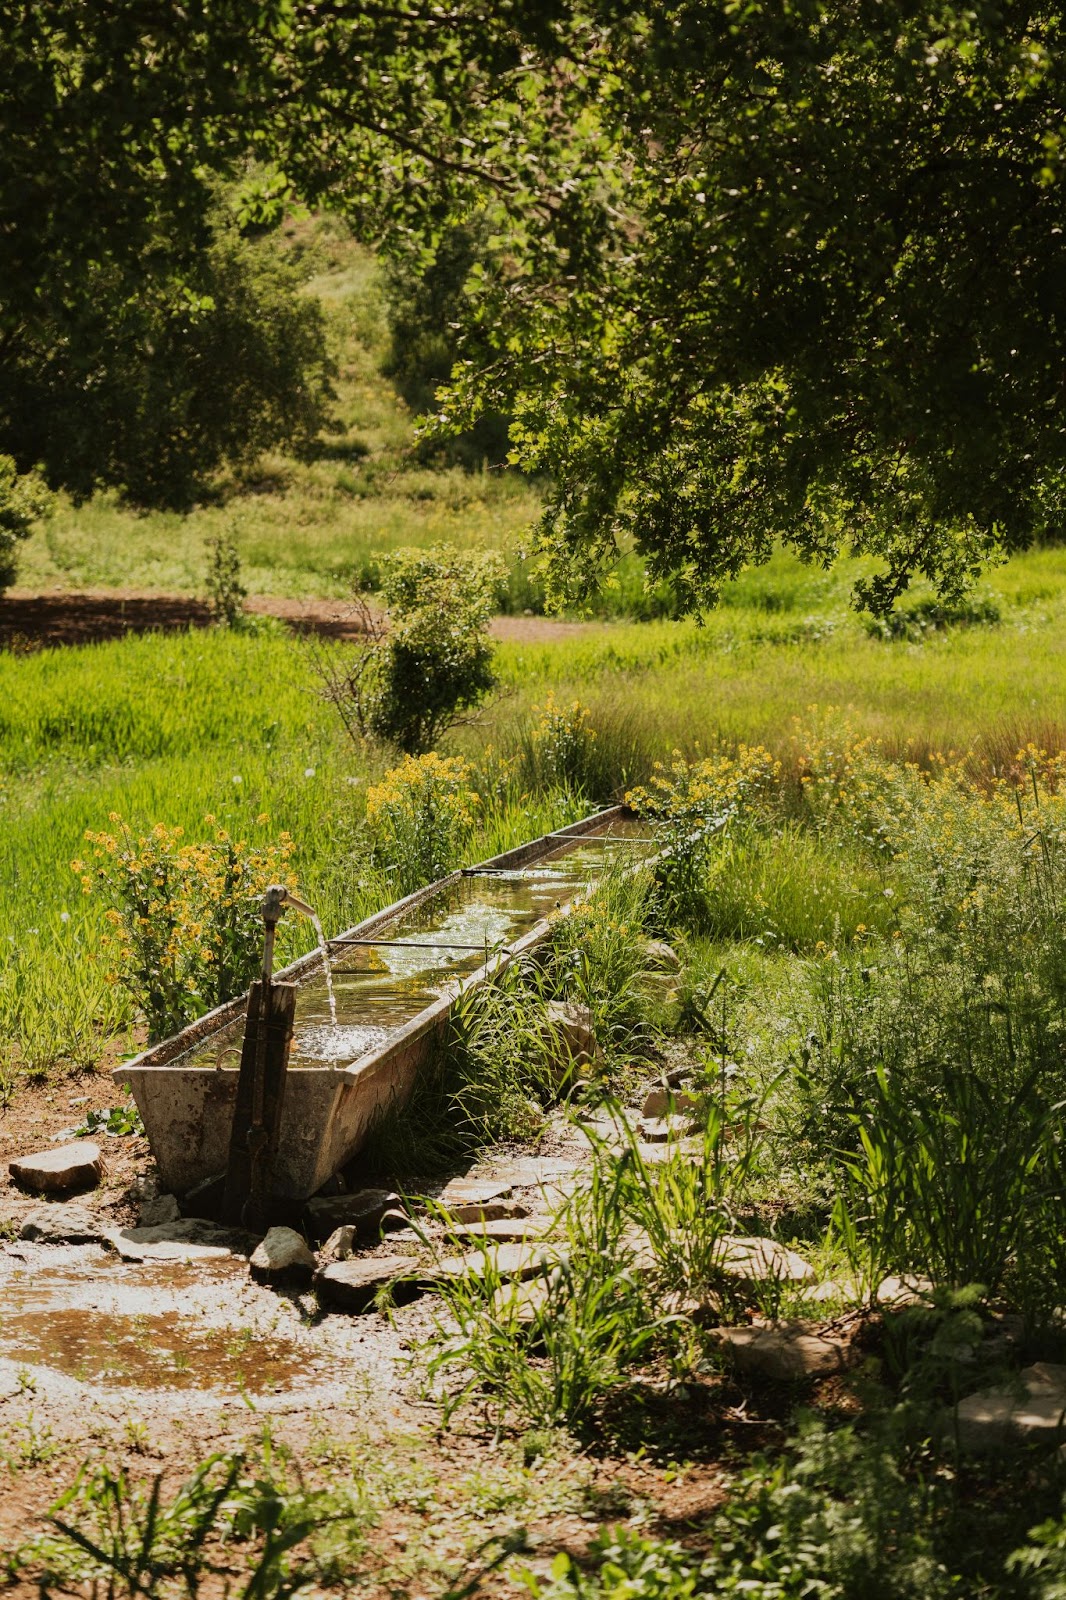 Water troughs among overgrown vegetation